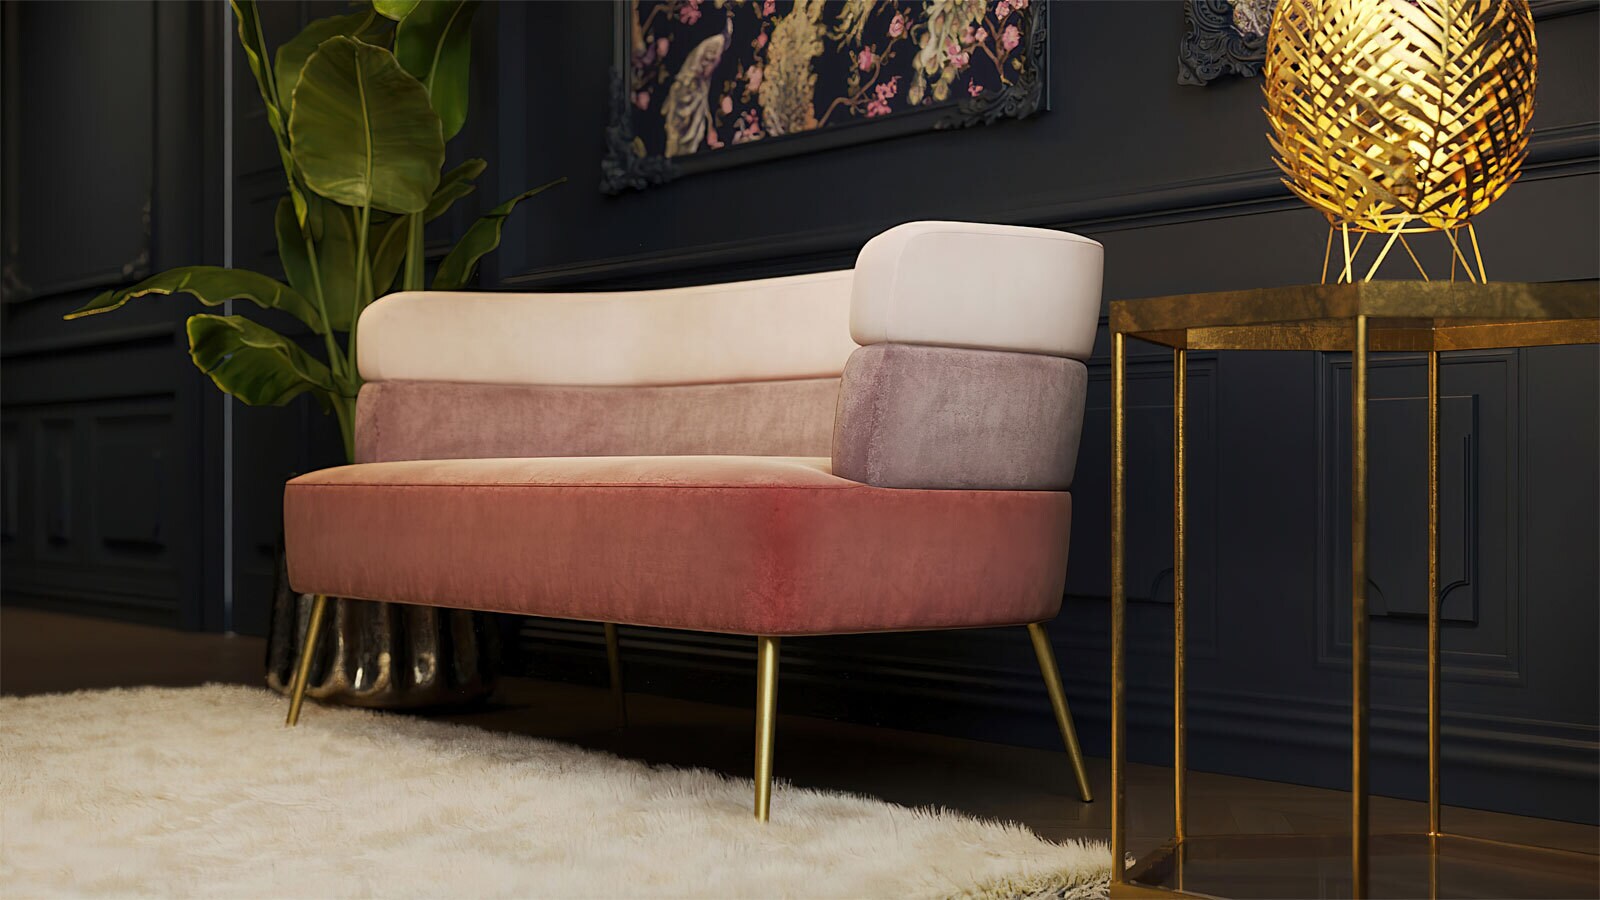 KARE DESIGN Sofa SANDWICH 125 x 64 cm rosa